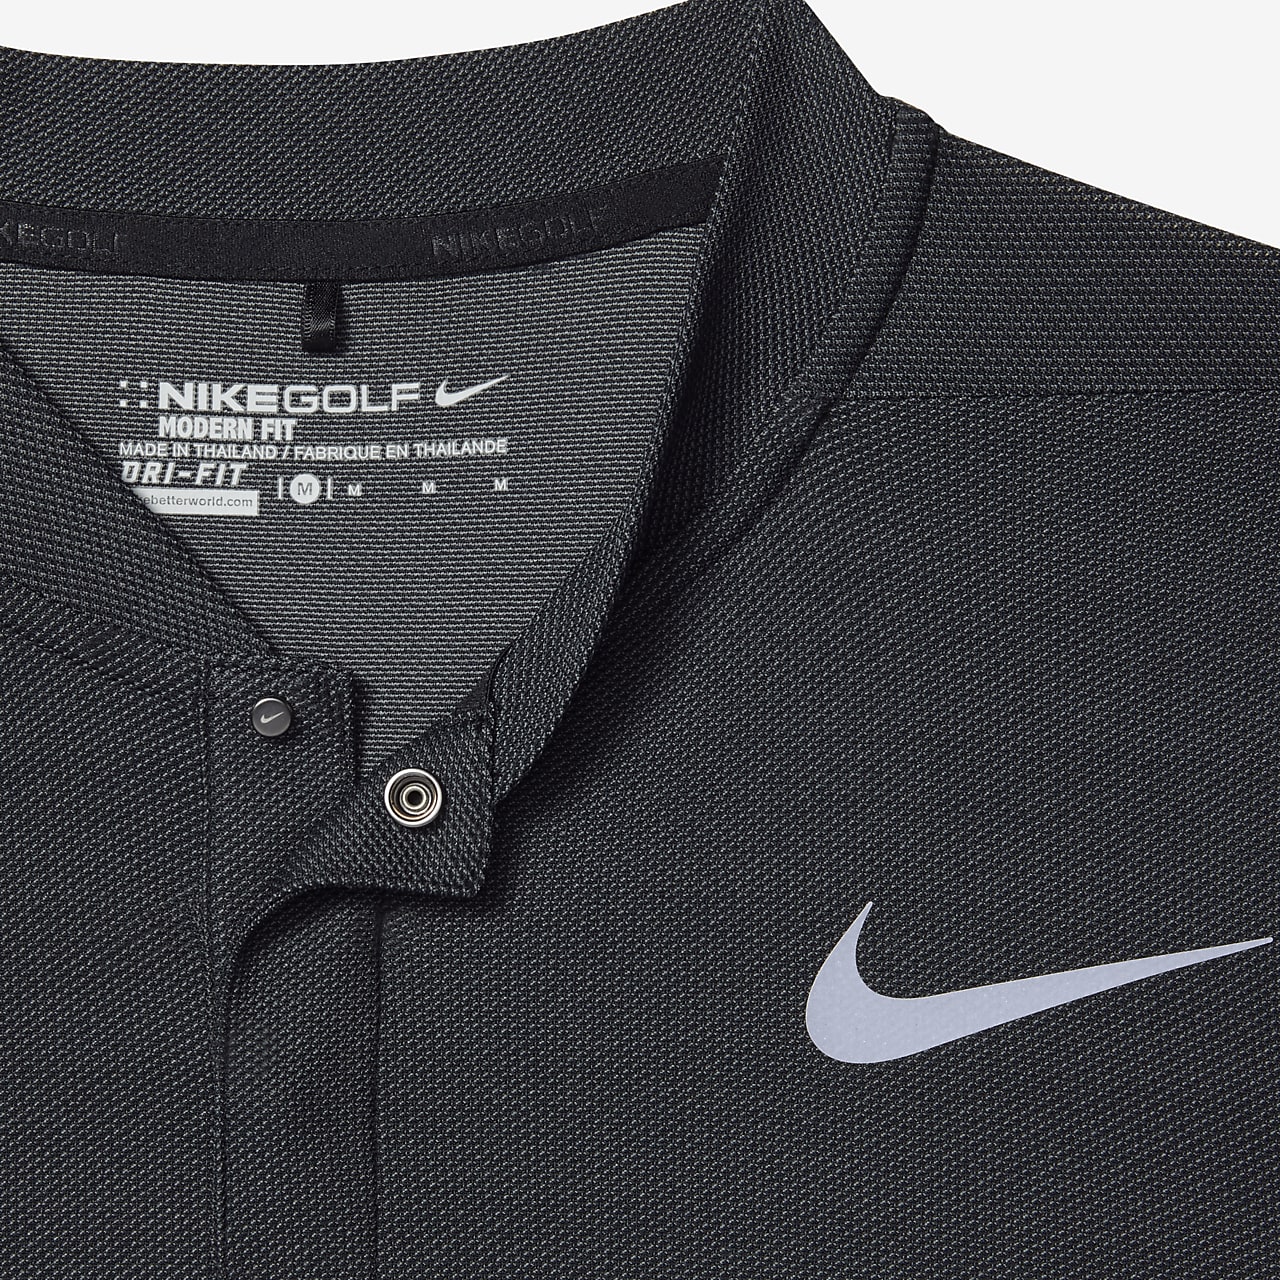 Nike Zonal Cooling Men's Slim Fit Golf 